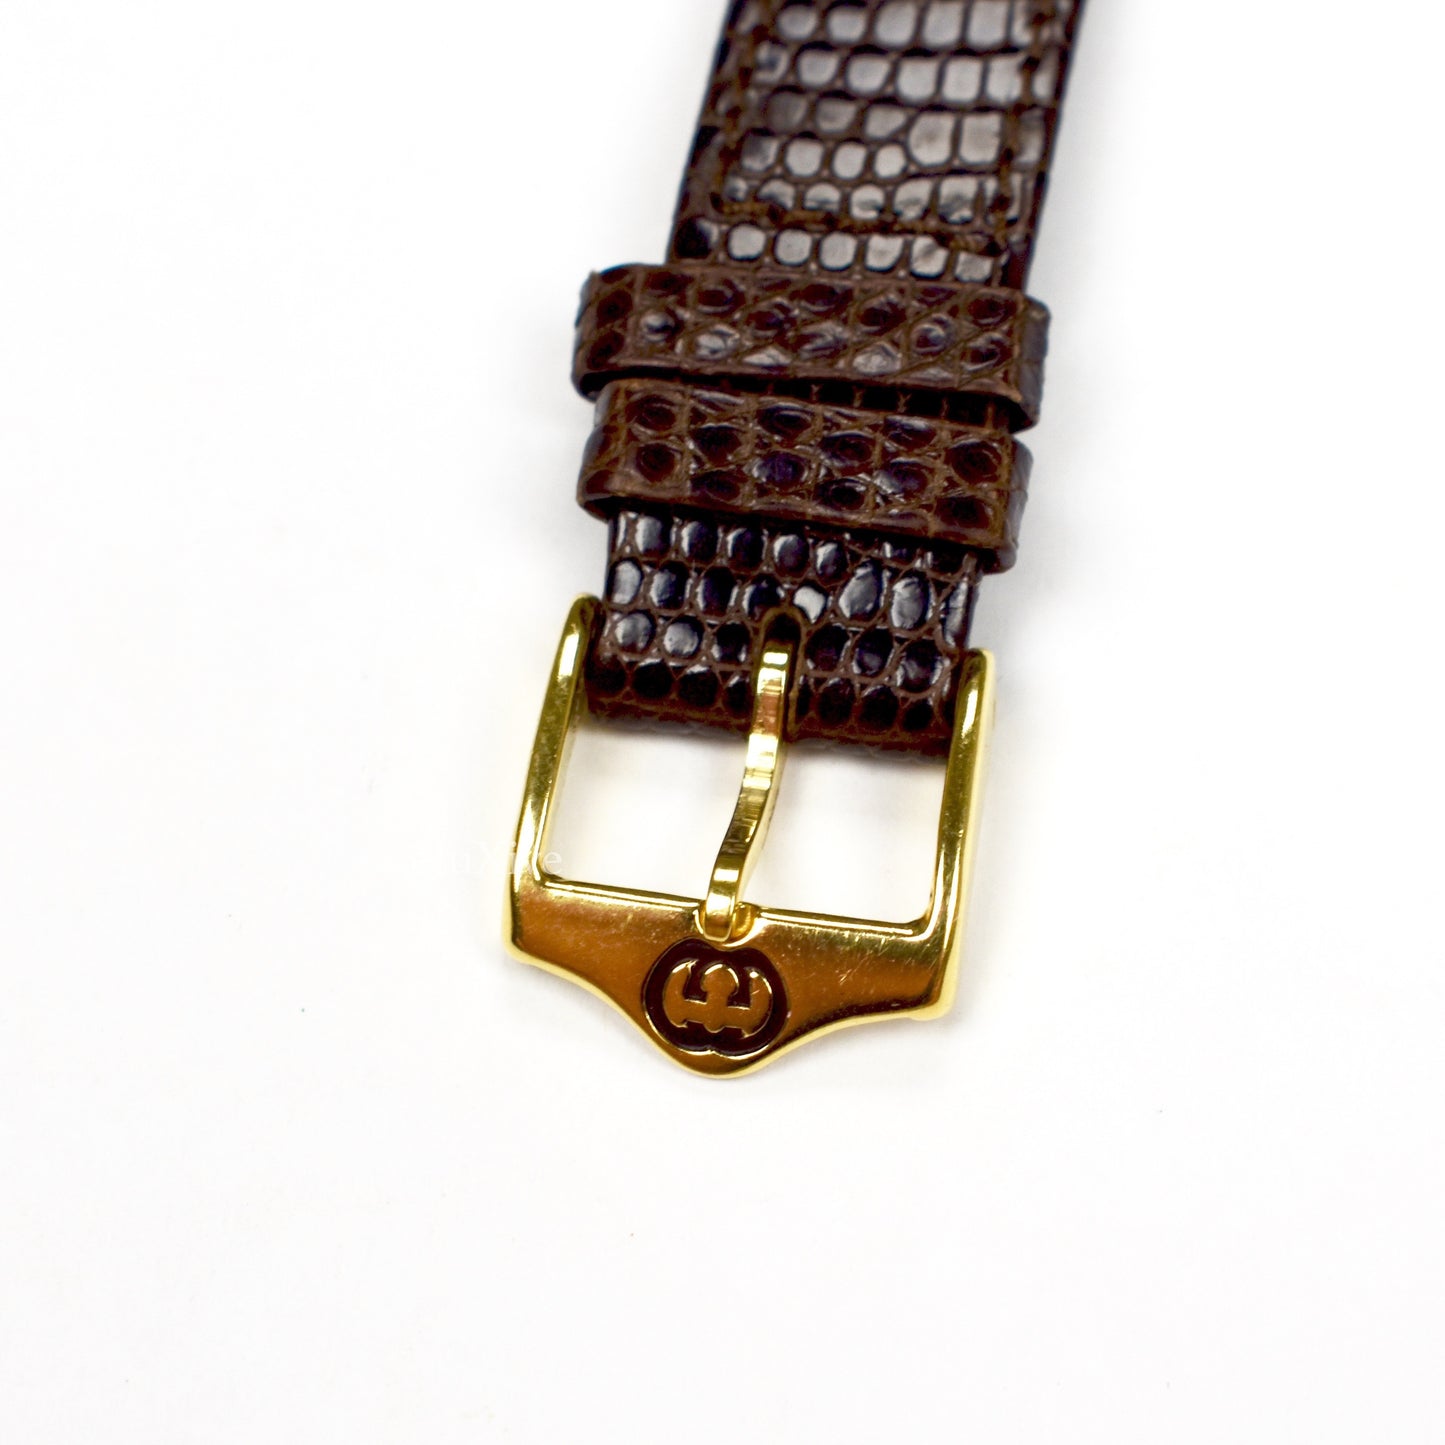 Gucci - 3000M Gold Web Stripe Watch (1987)